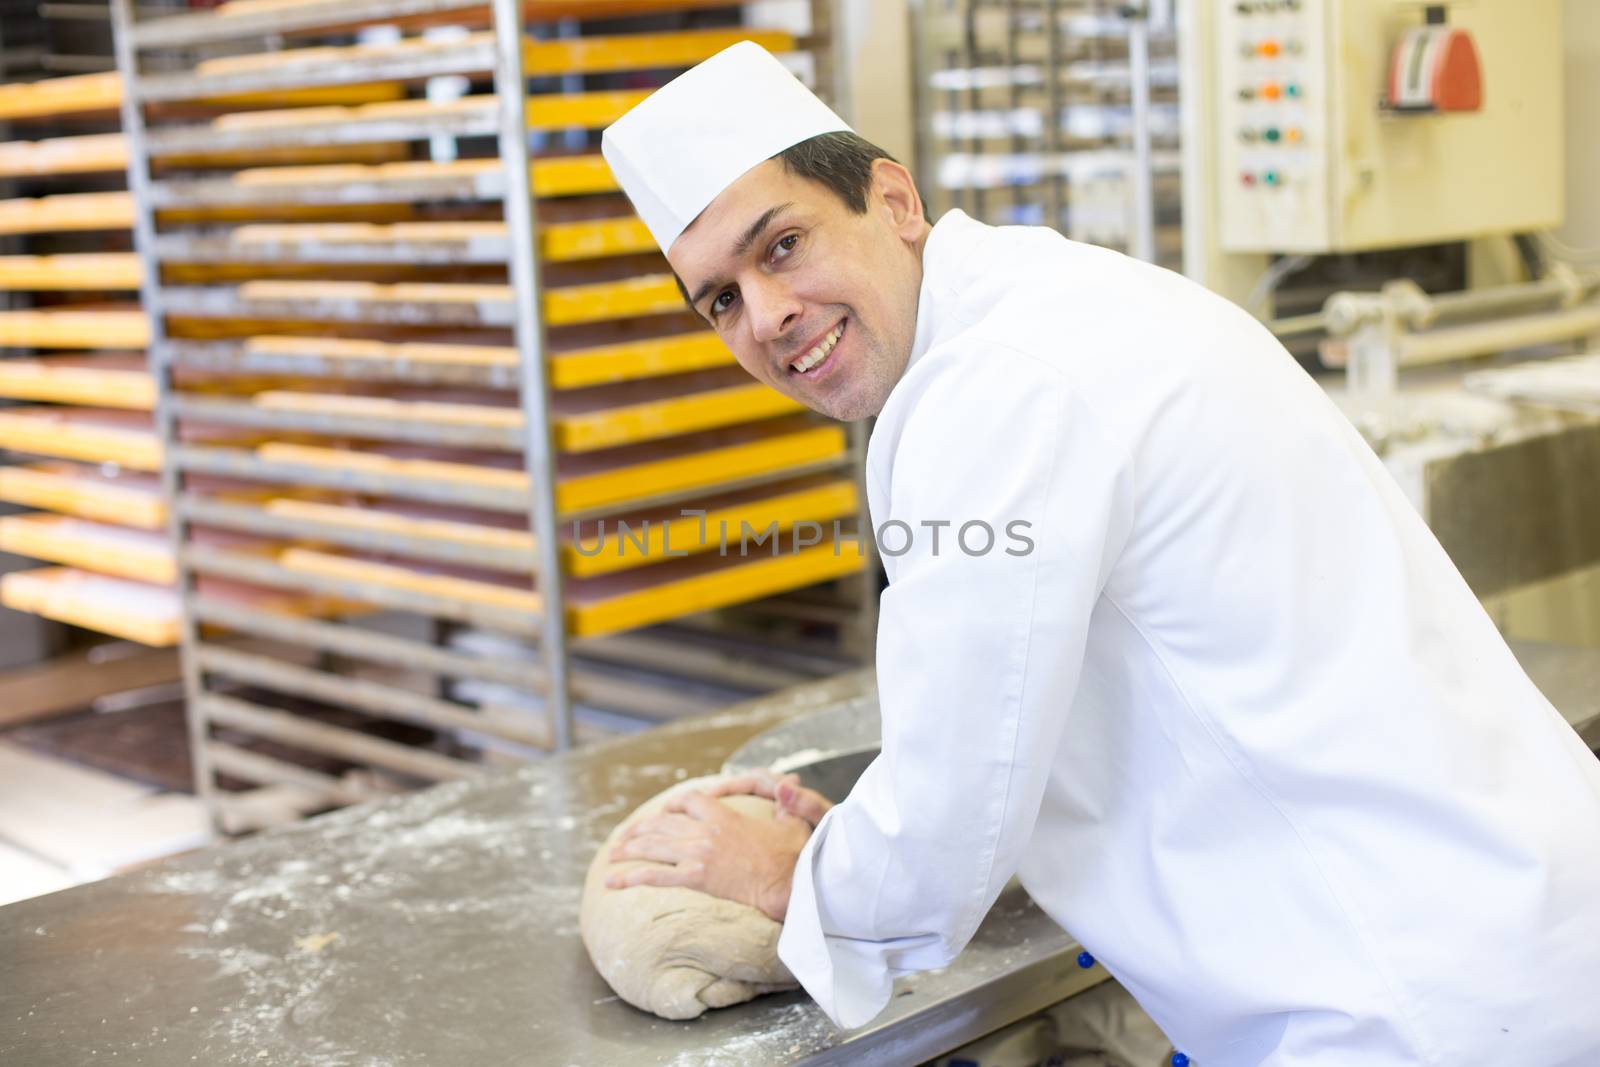 Baker kneading dough in a bakehouse or bakery